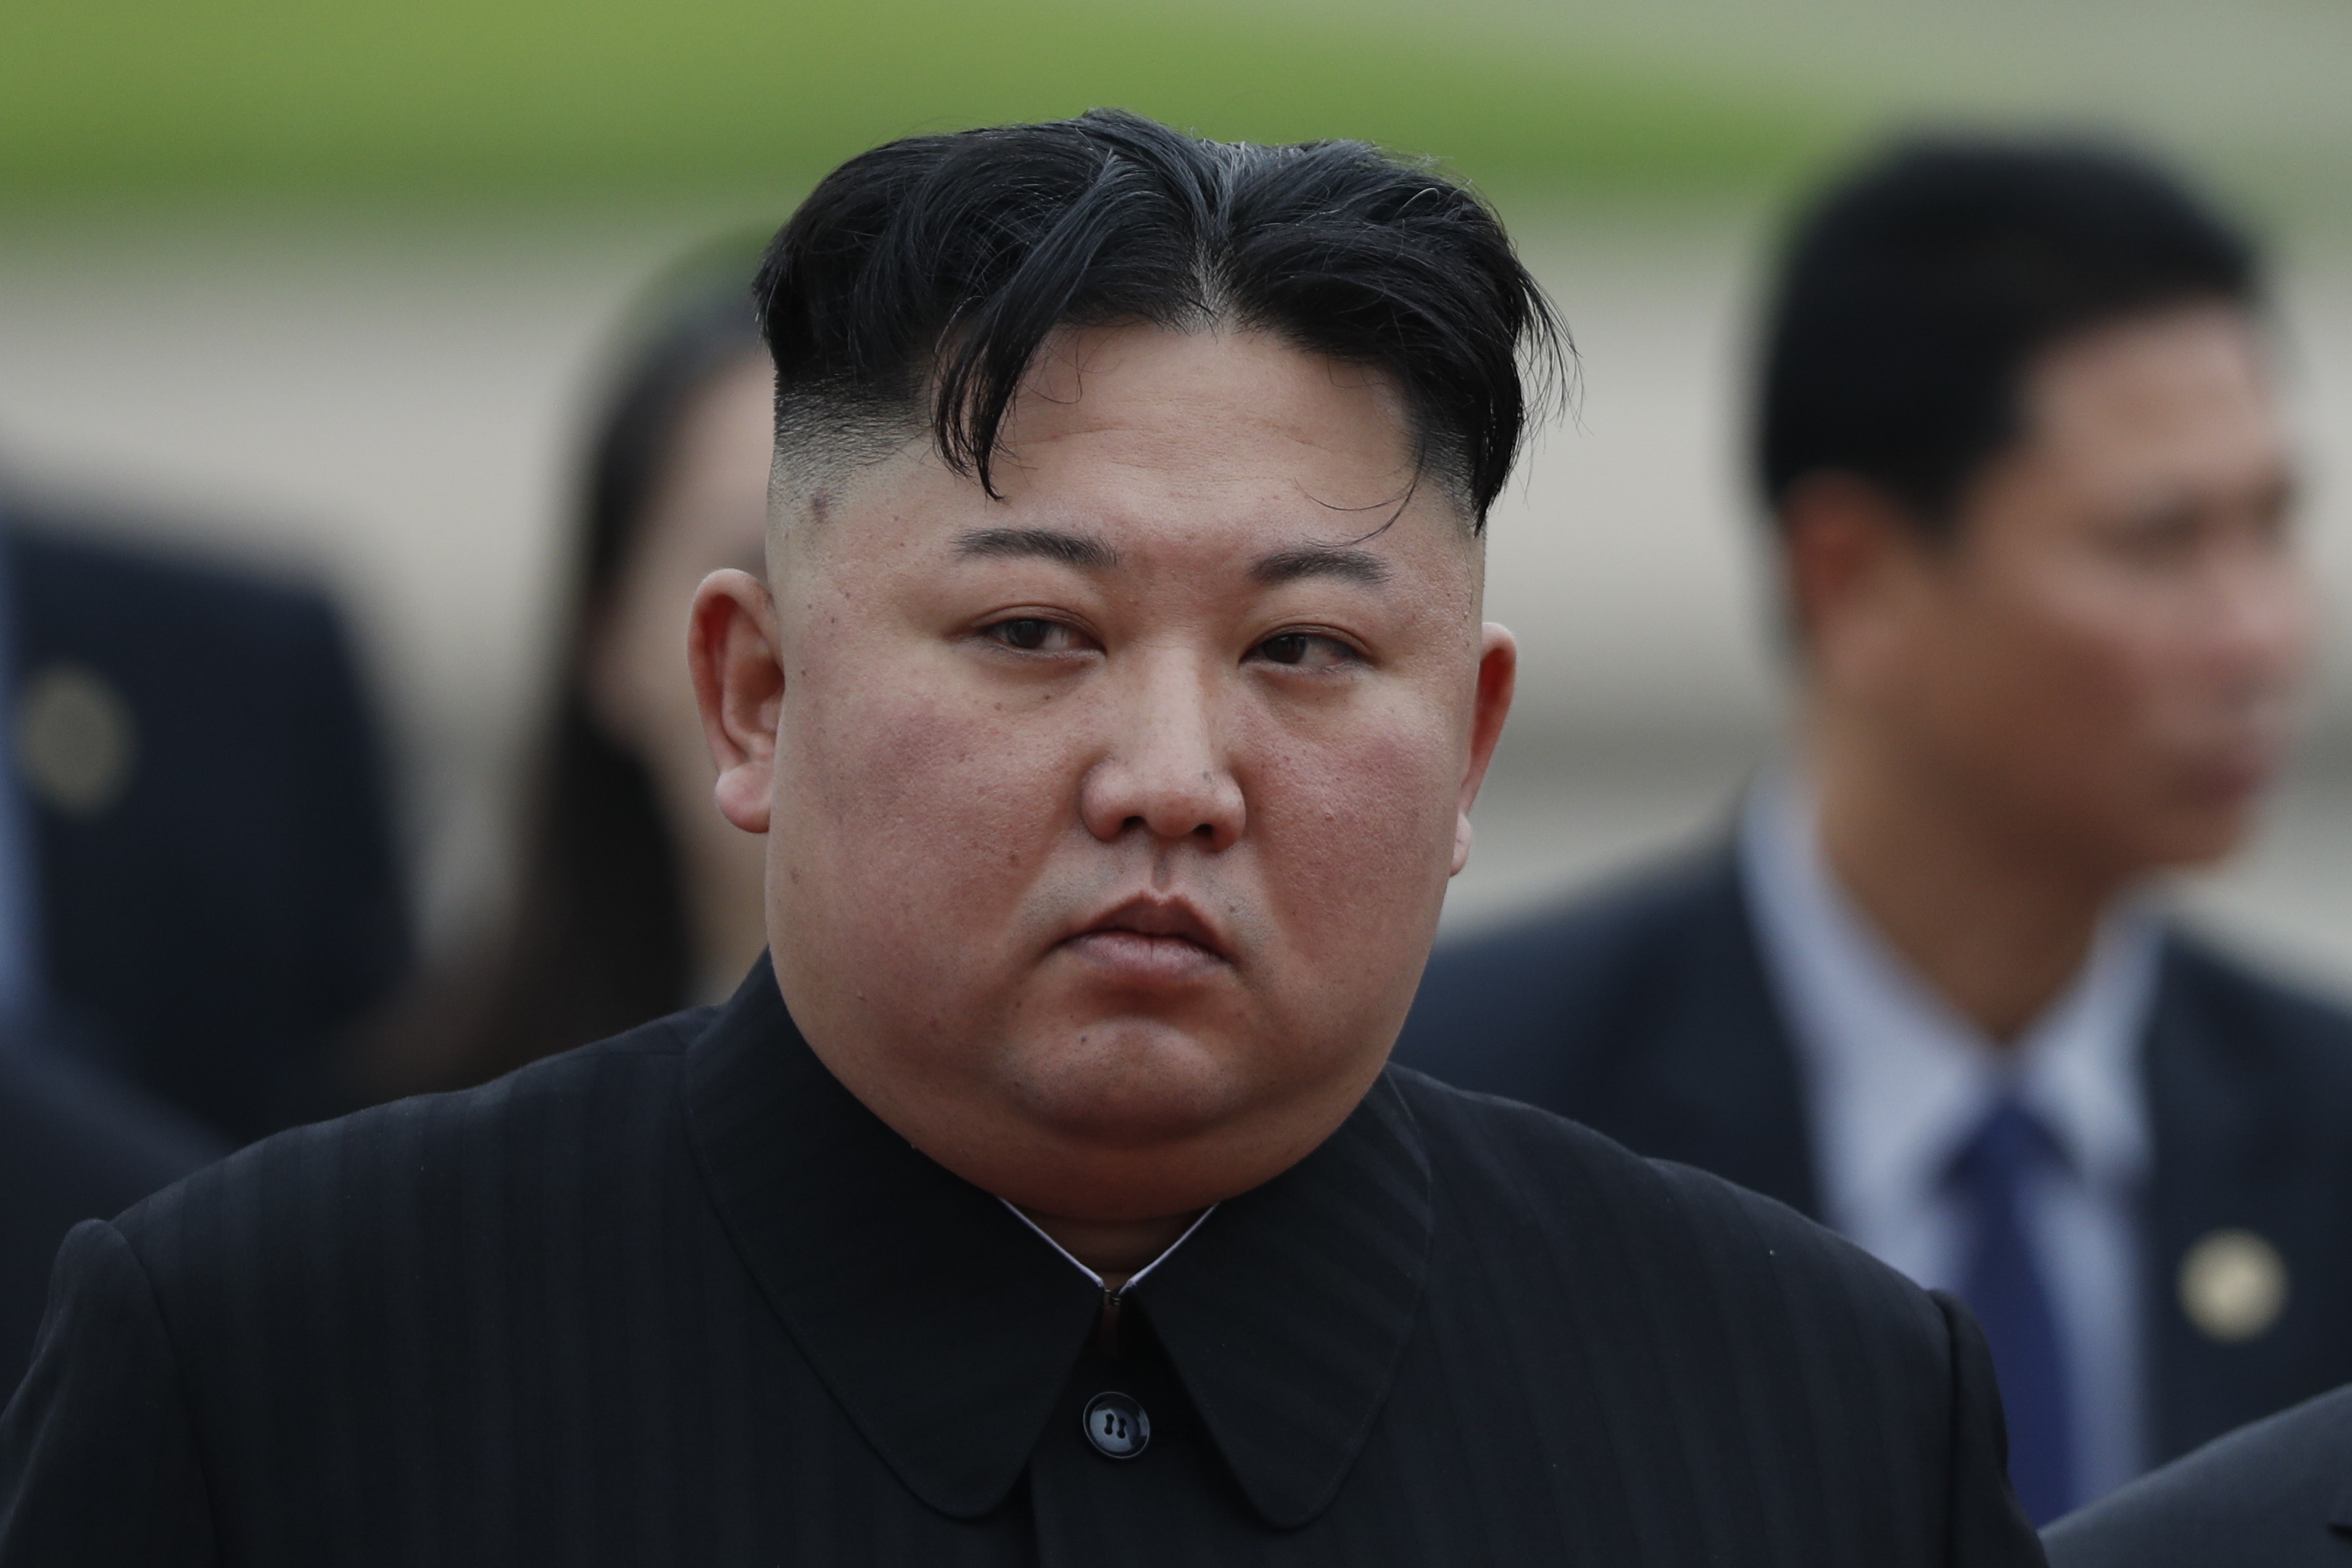 El dictador norcoreano, Kim Jong-un